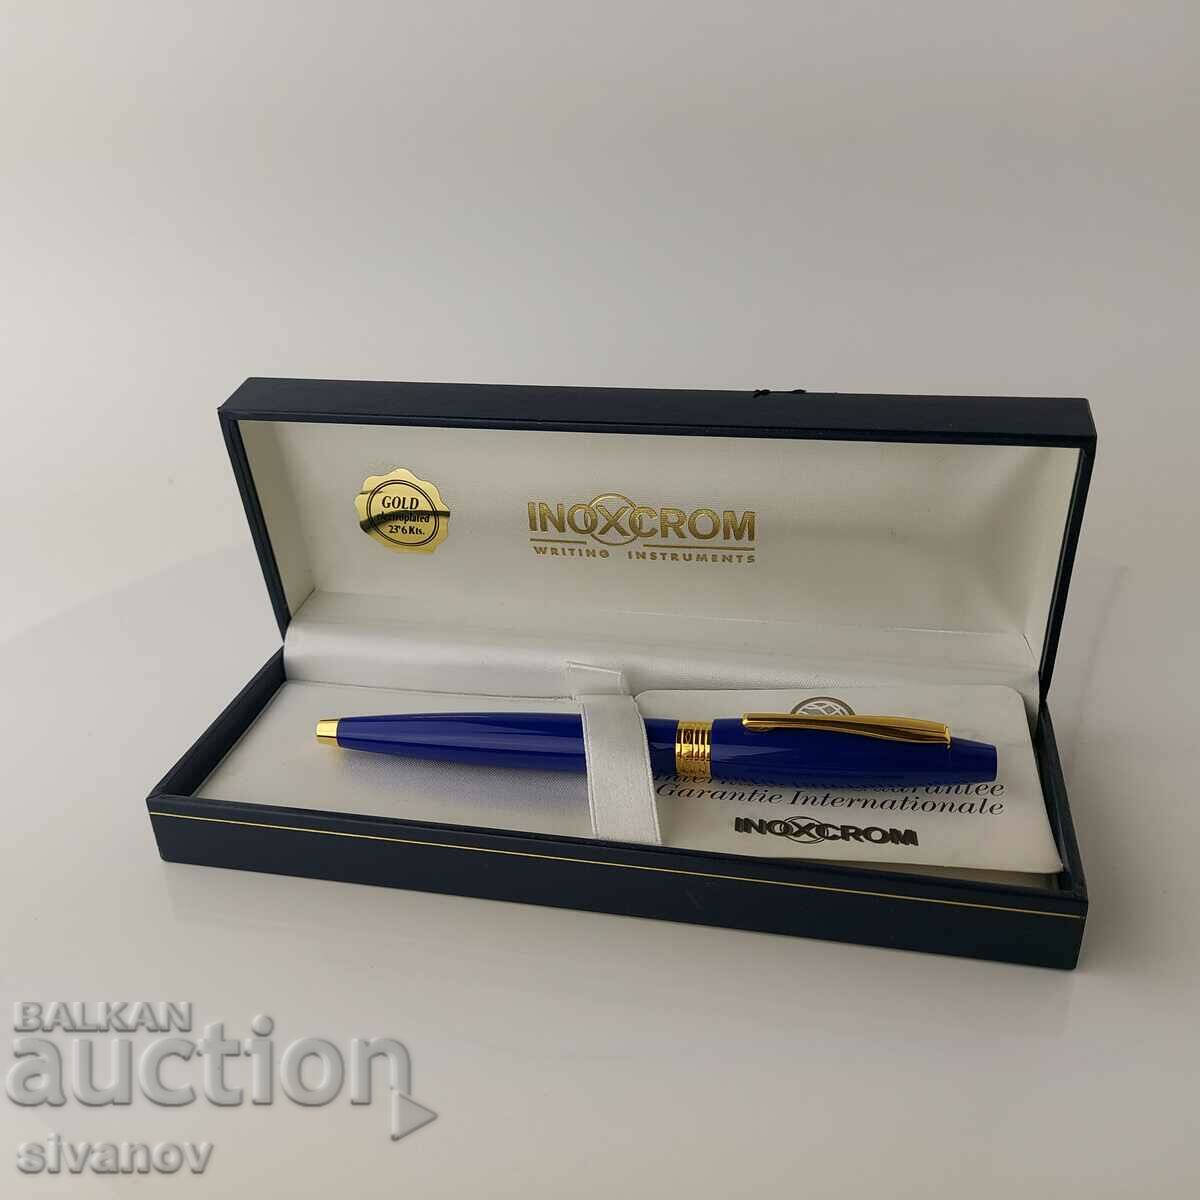 Interesting INOXCROM Nautilus Spain pen in box #5575